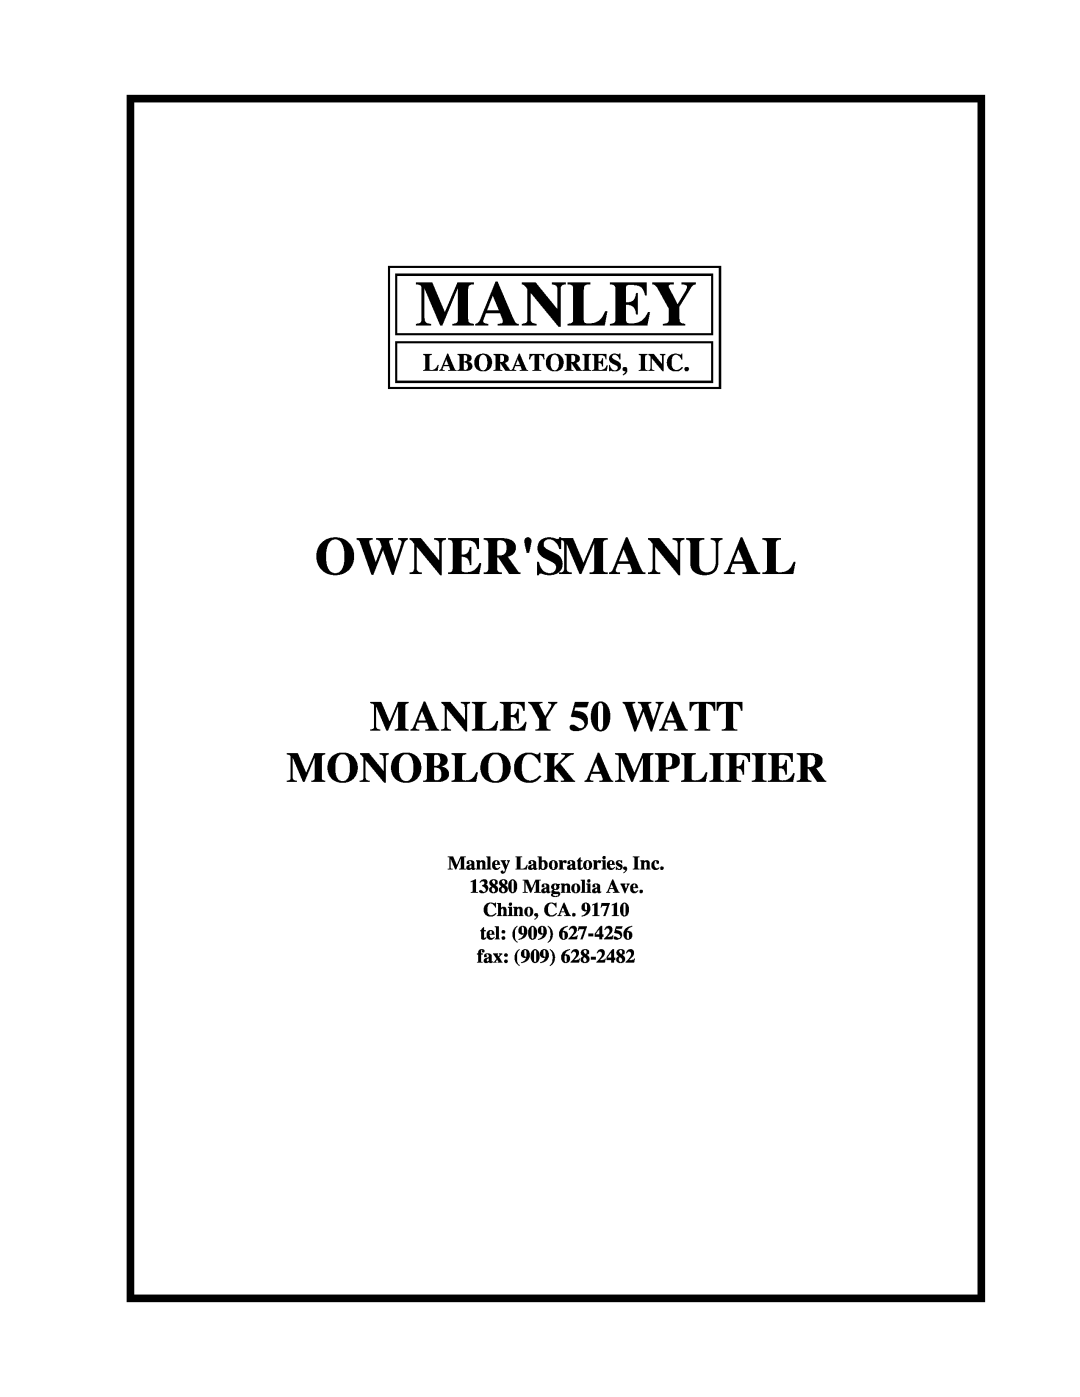 Manley Labs 50 WATT MONOBLOCK AMPLIFIER owner manual Laboratories, Inc, Manley, Ownersmanual 